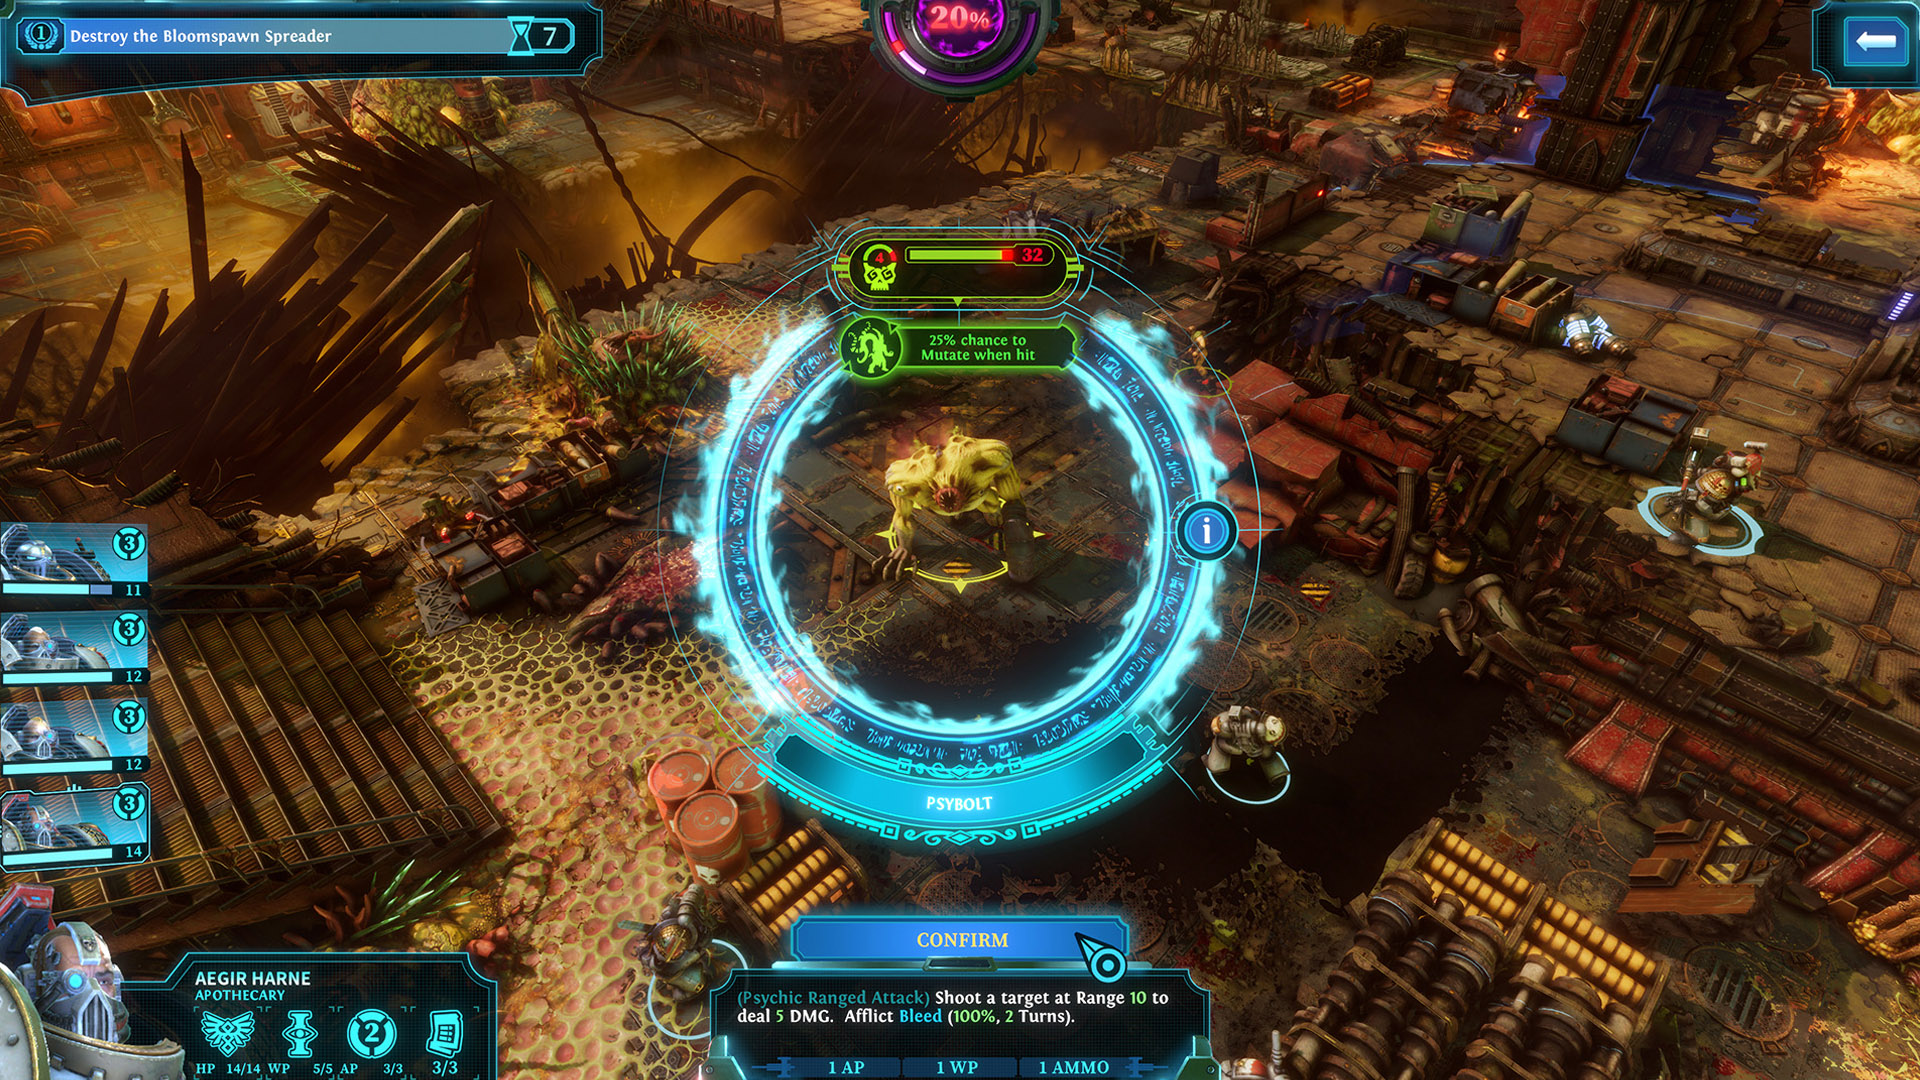 Warhammer 40,000: Chaos Gate - Daemonhunters - Launch | SEA (bd245561-c096-4db0-9461-453f7c900801)